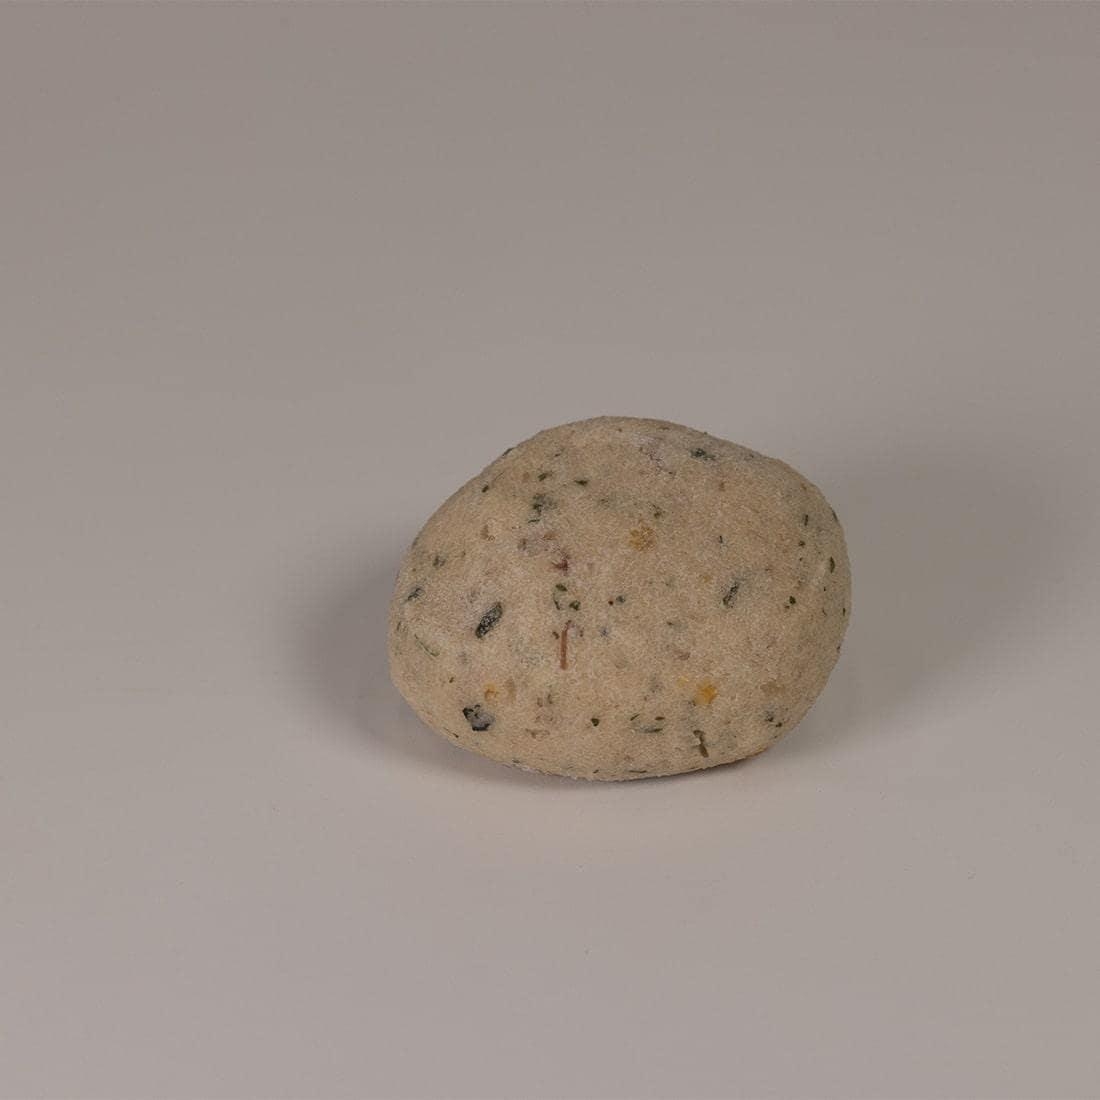 Image 1 of Grouper balls